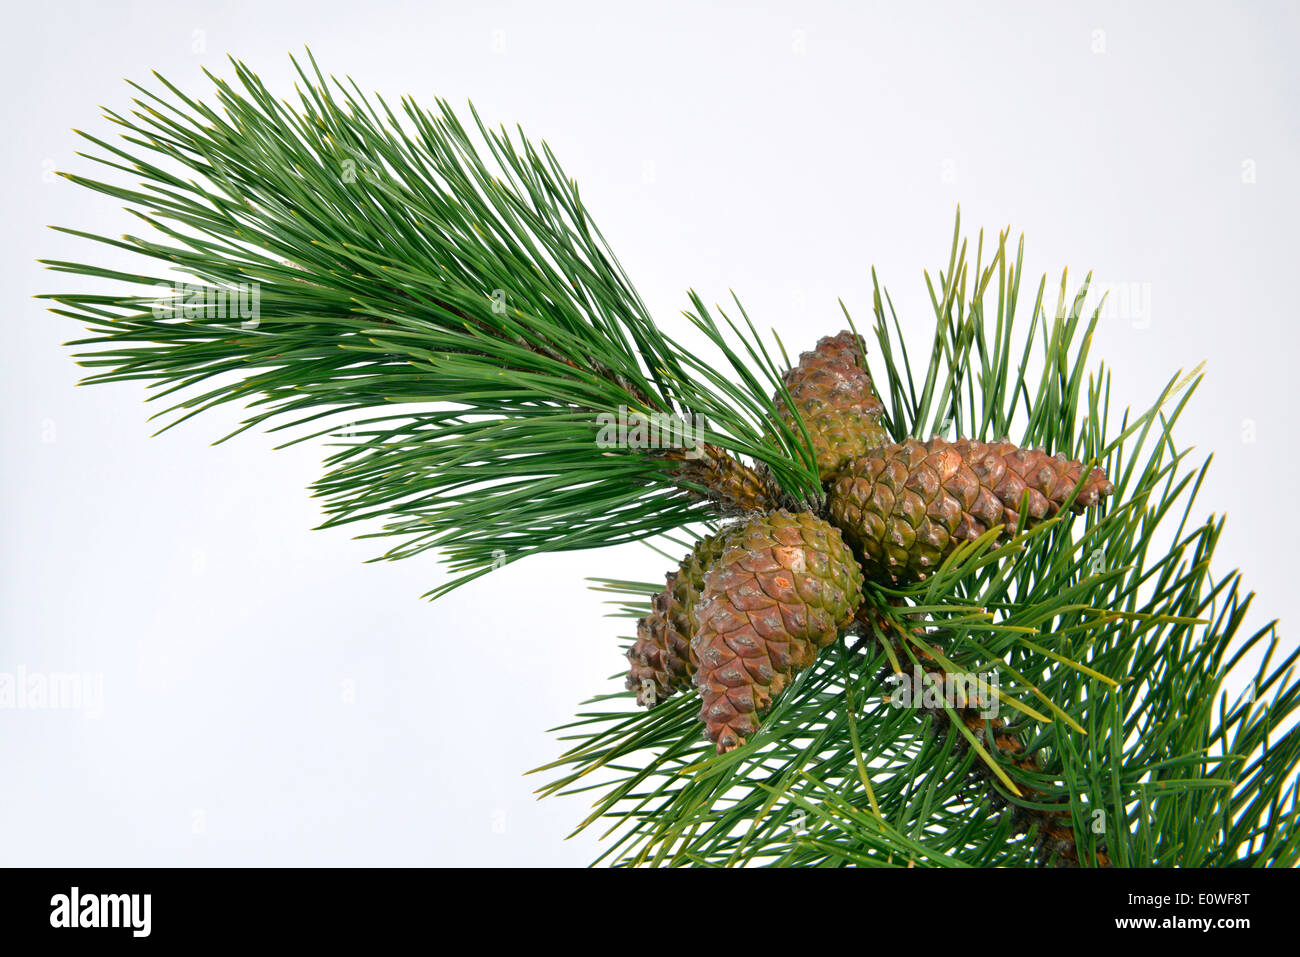 Austrian Pine, Black Pine, Corsican Pine (Pinus nigra), twig with cones. Studio shot against a white background. Stock Photo